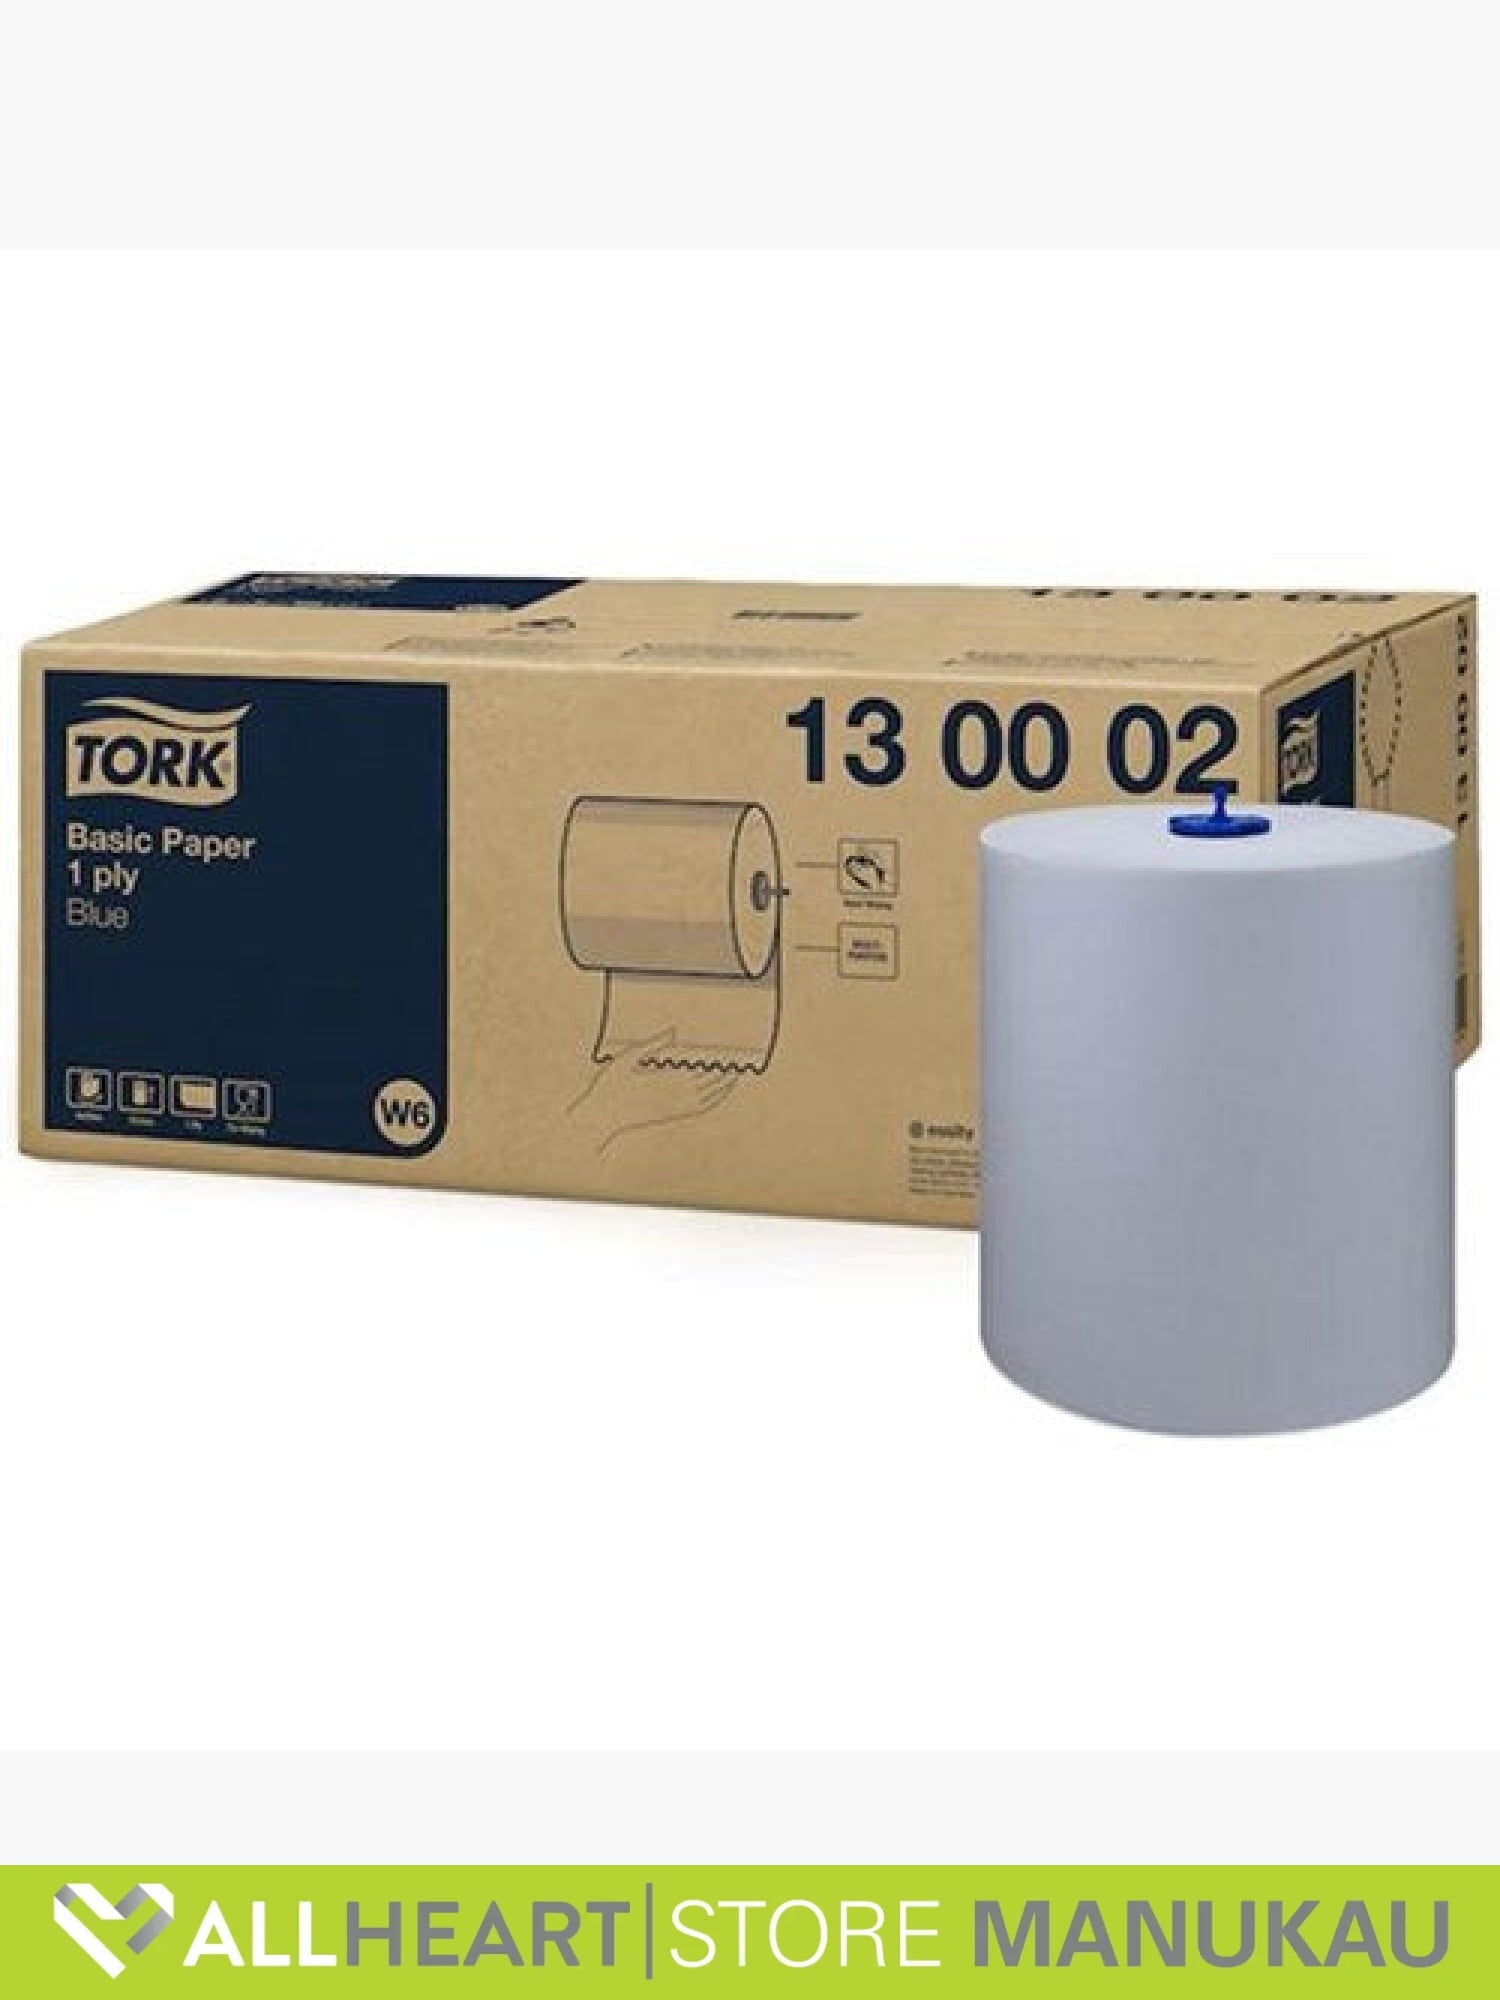 Tork - Basic Paper 1 Ply - Blue - W6 13 00 02